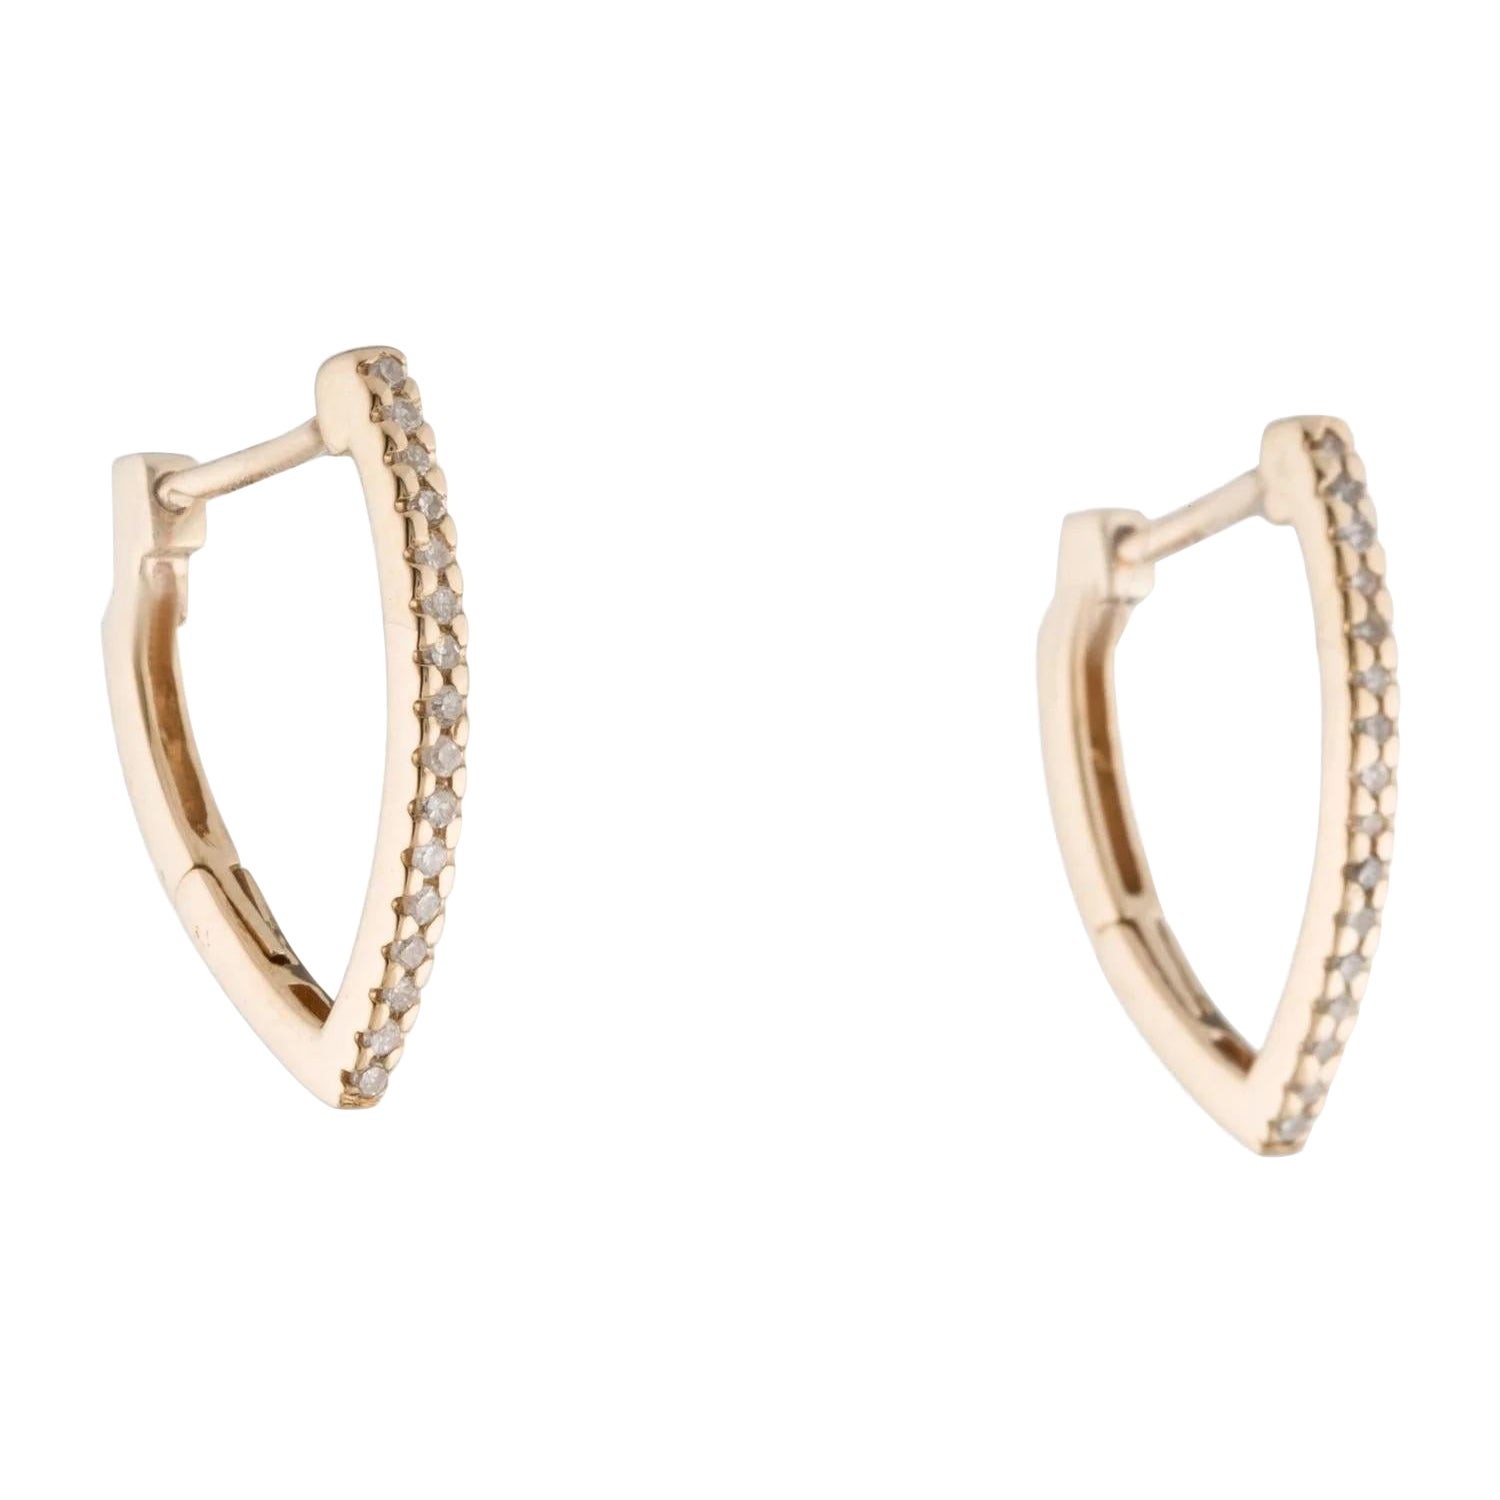 14K Diamond Hoop Earrings - 0.14 Carat Single Cut Diamonds